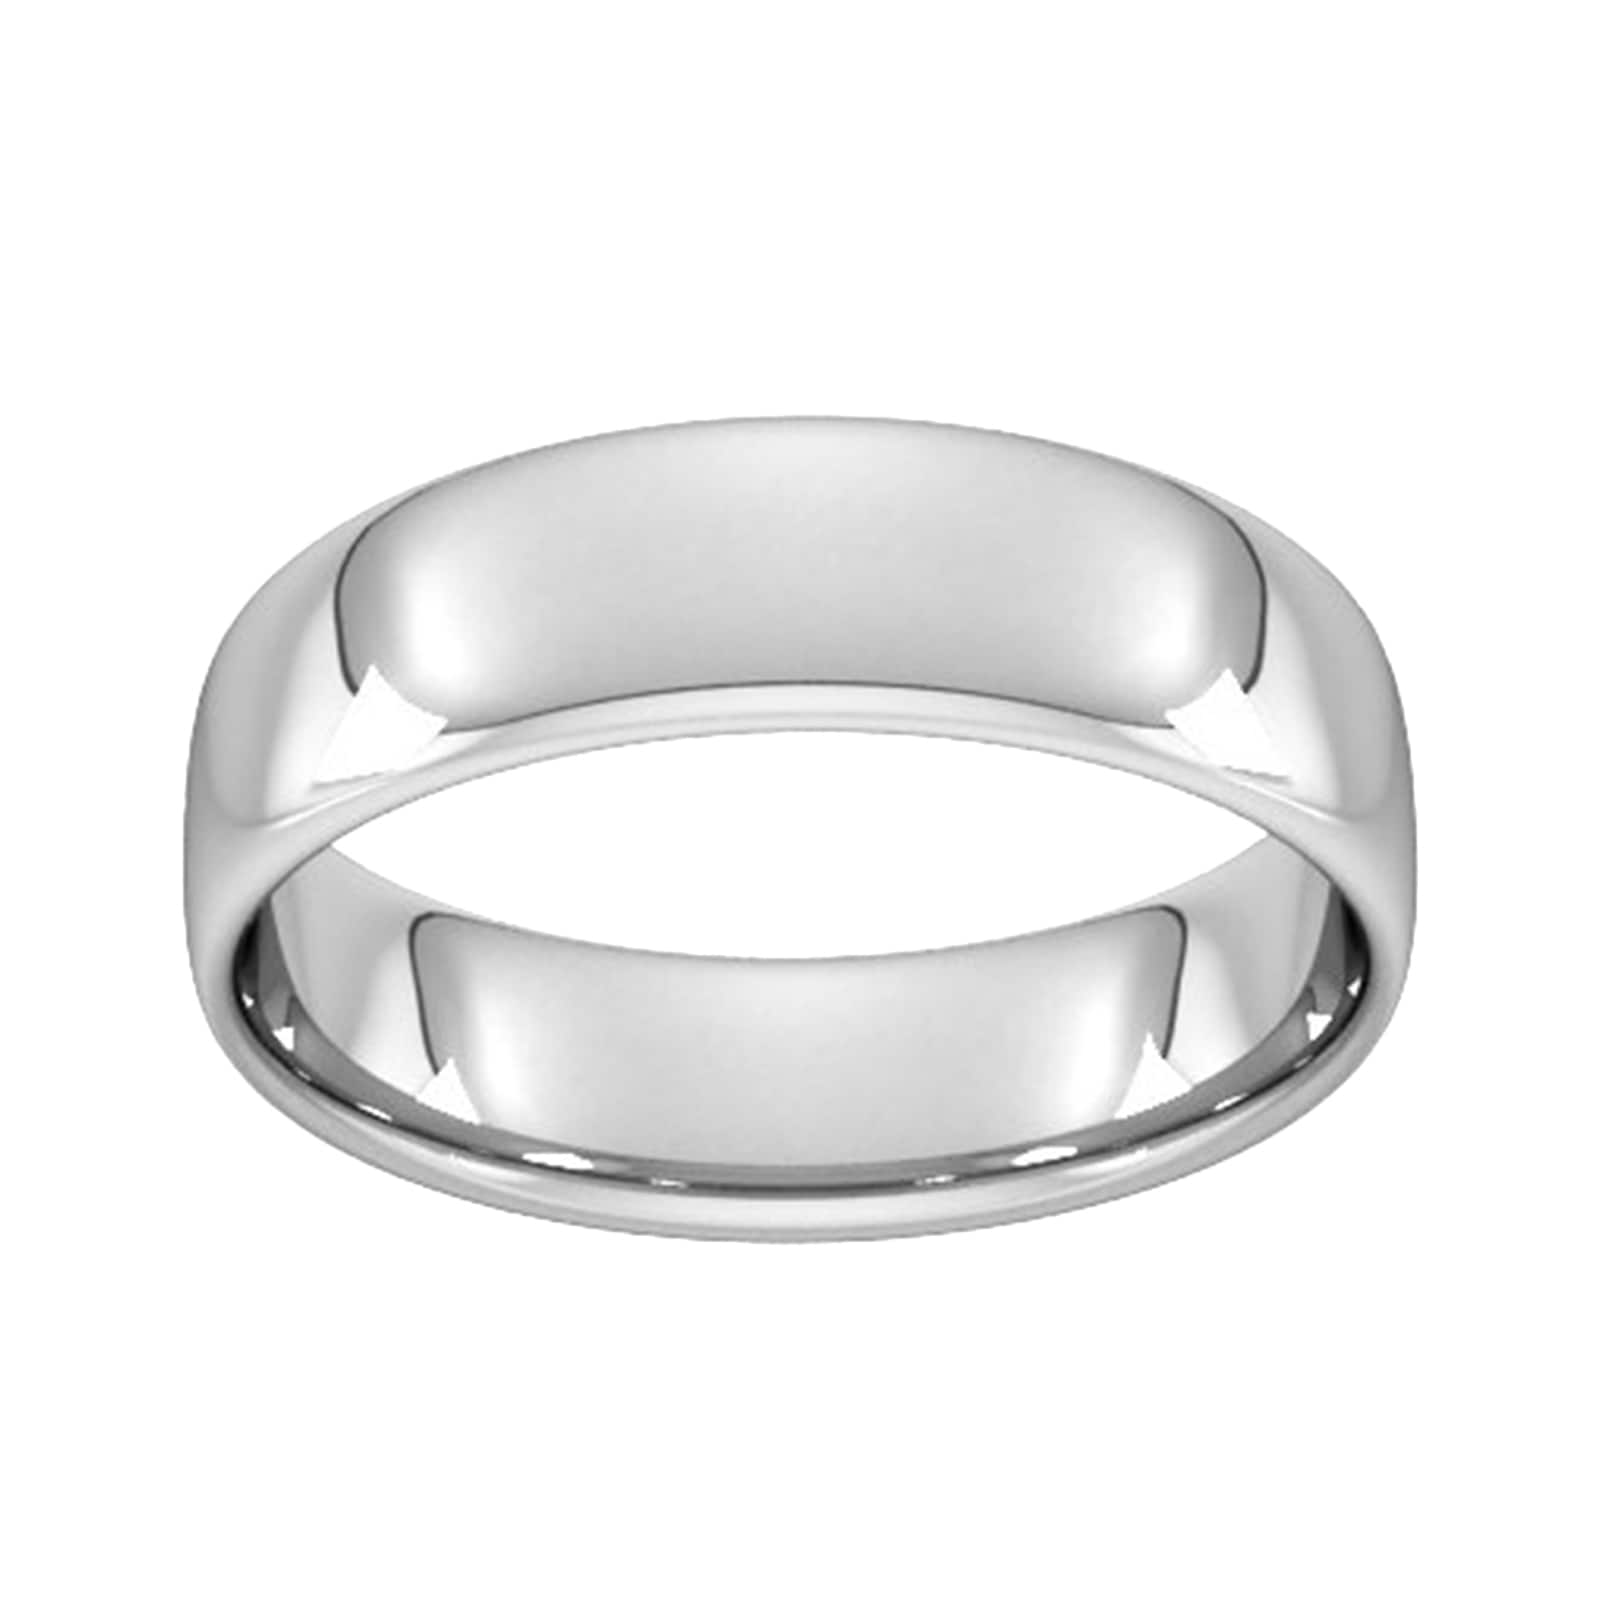 6mm Slight Court Standard Wedding Ring In 18 Carat White Gold - Ring Size J